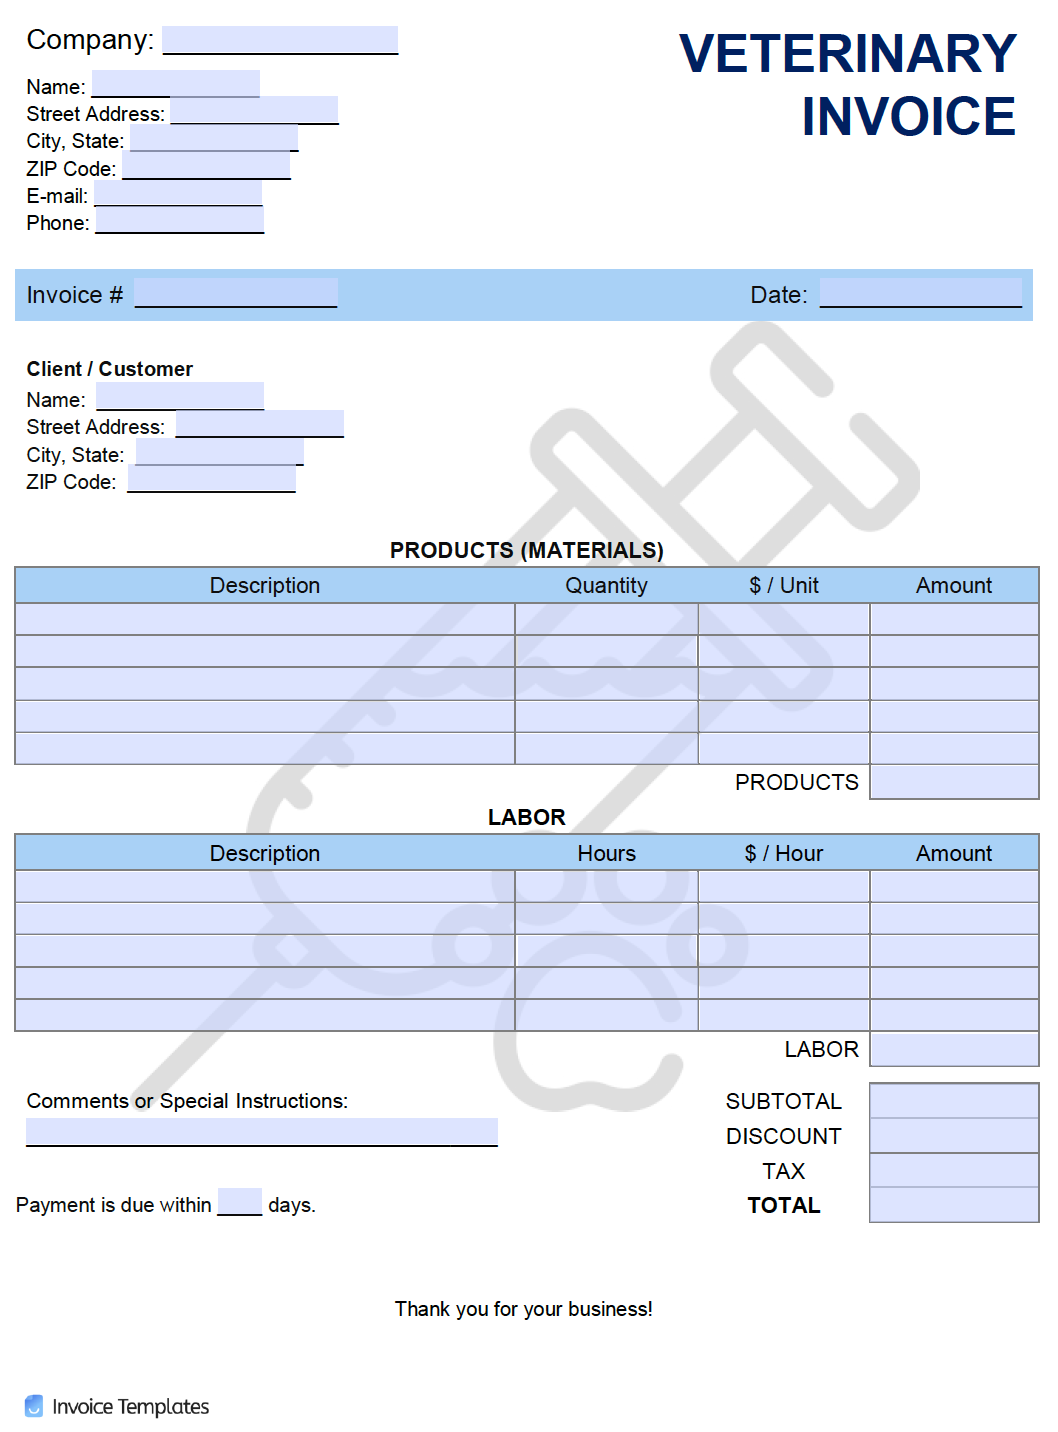 Free Veterinary Invoice Template  PDF  WORD  EXCEL For Veterinary Invoice Template